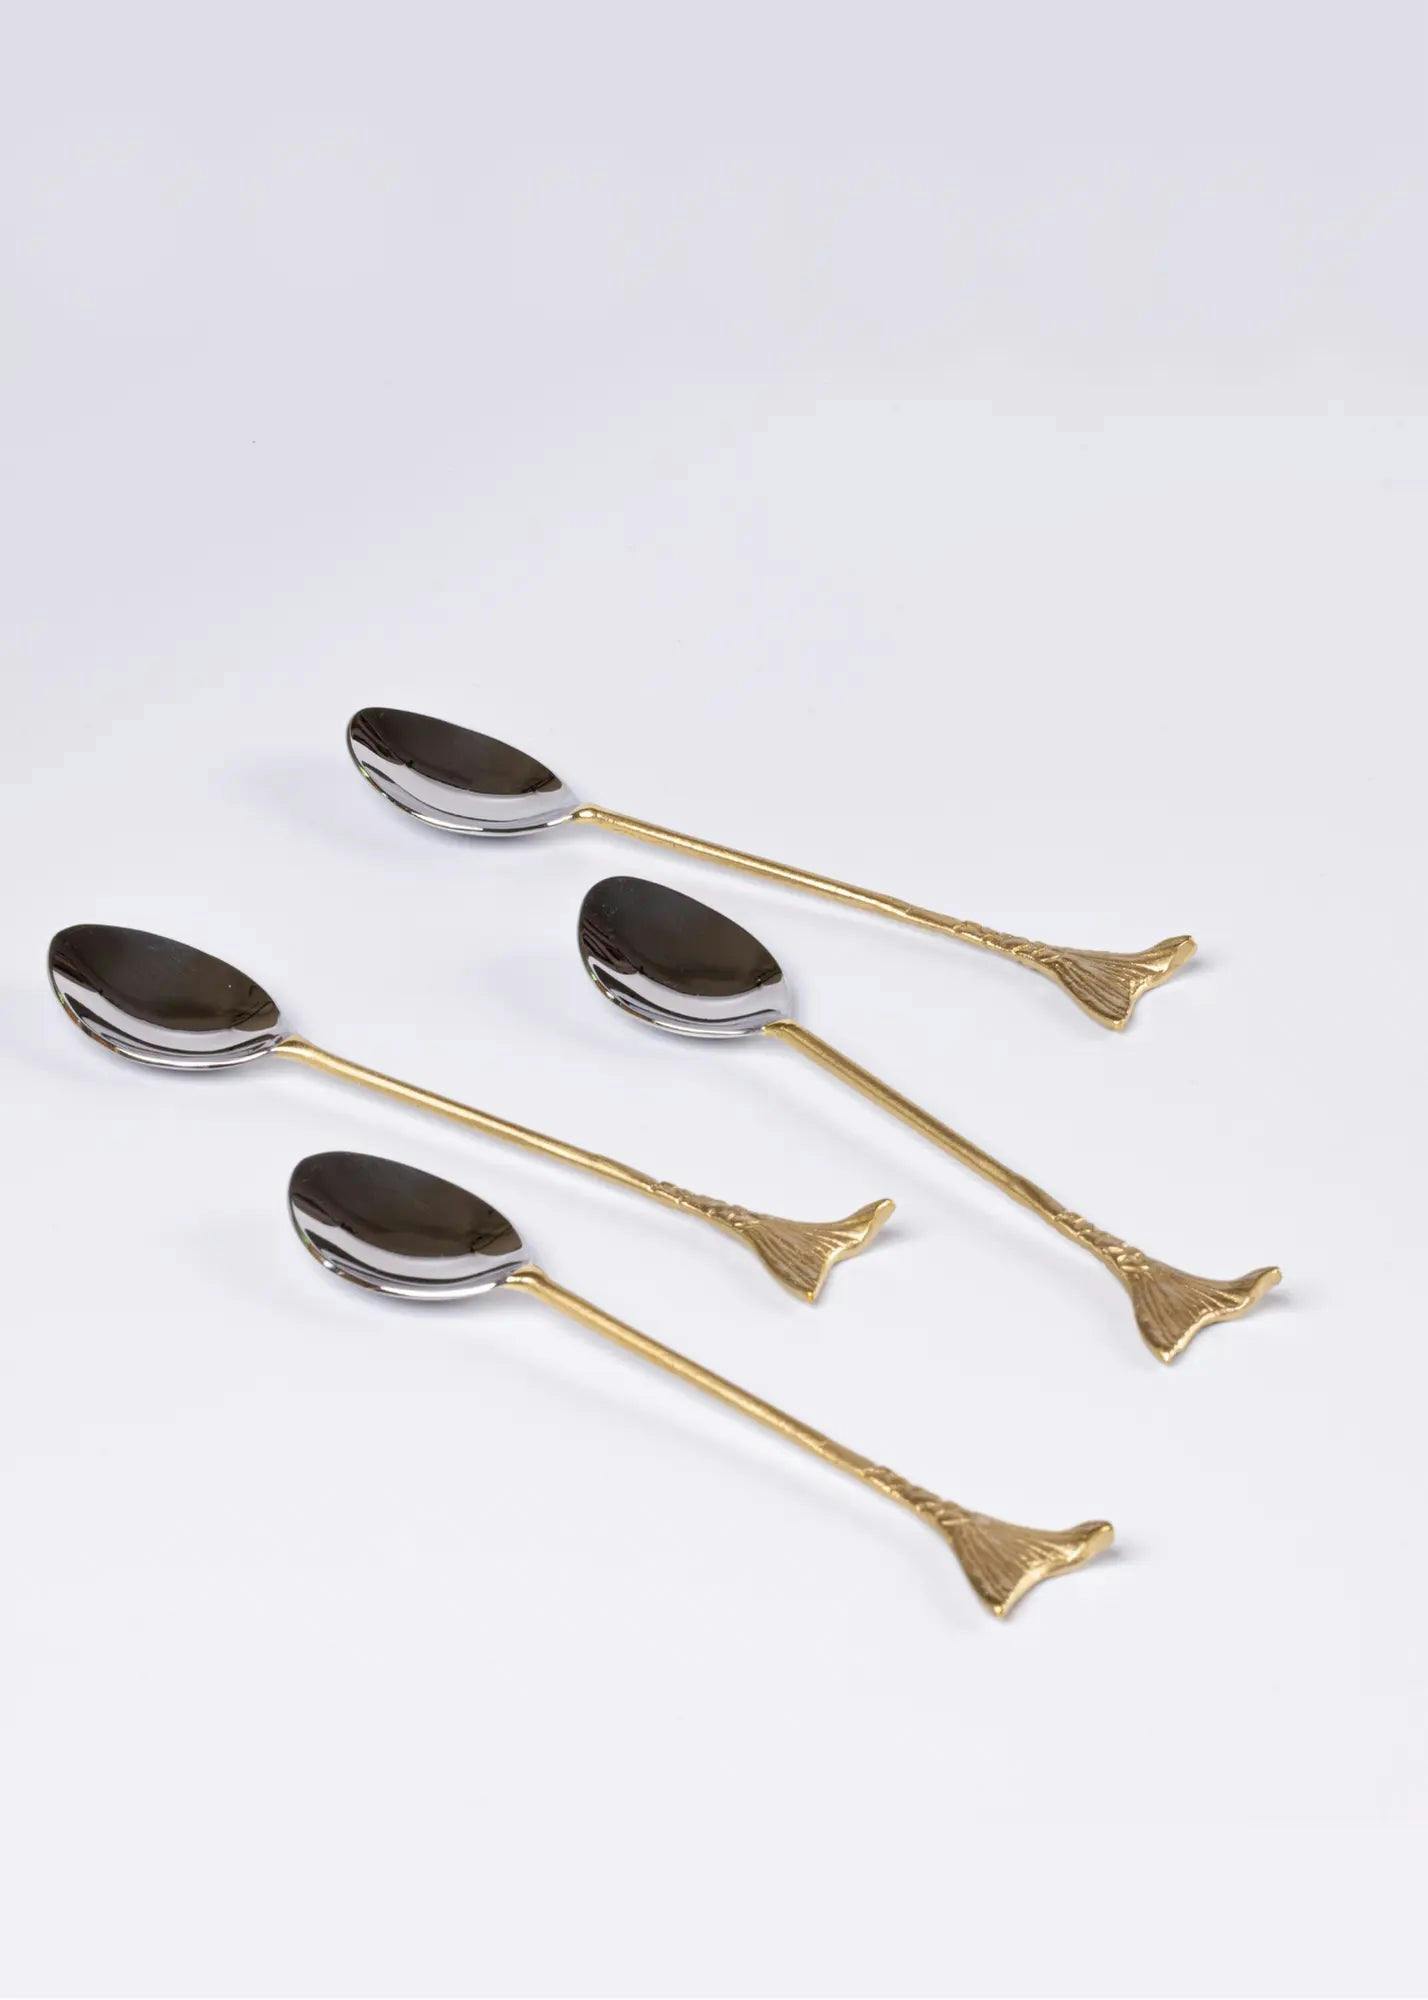 Mermaid Sona Chaandi Dessert Spoons, a product by Gado Living